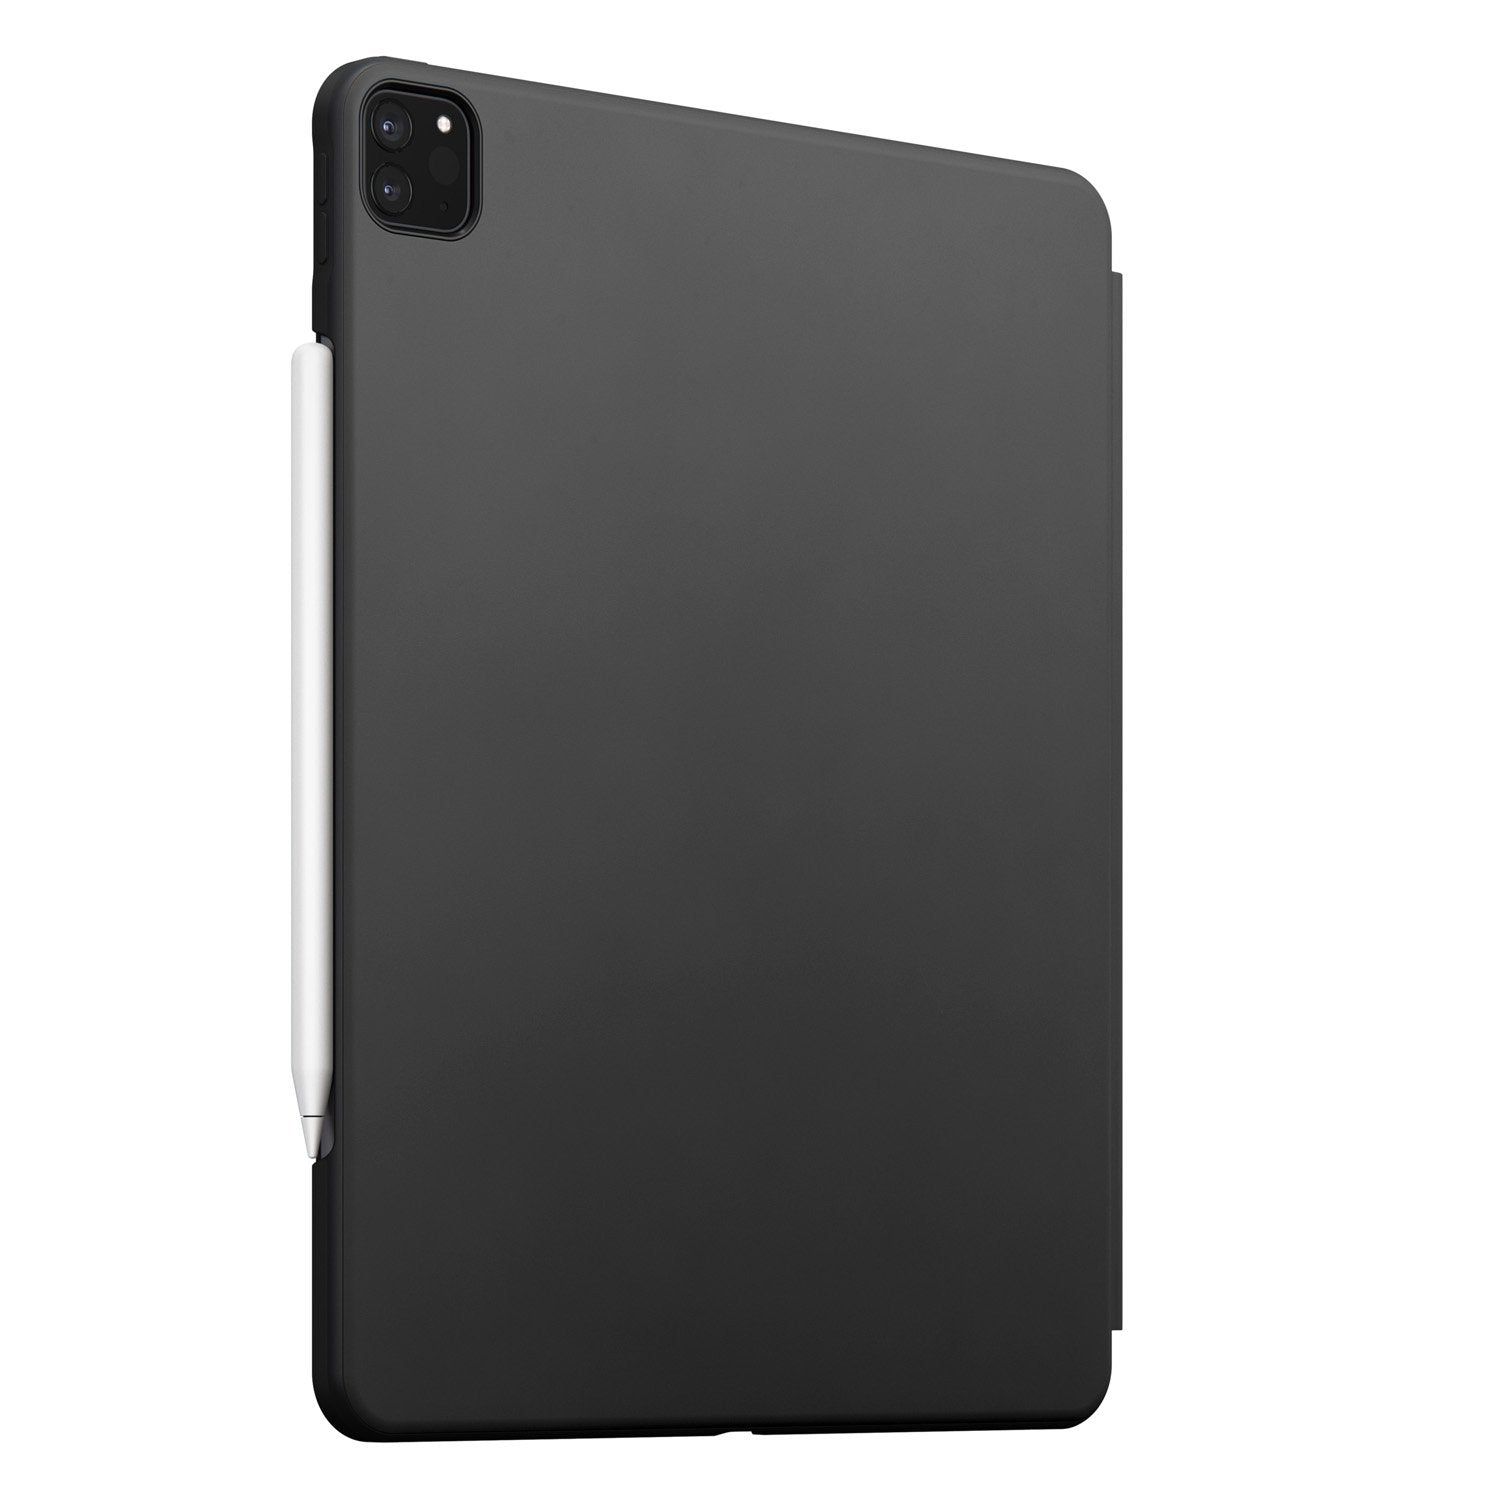 NOMAD Rugged Folio PU Leather Case for iPad Pro 12.9"(2020), Gray Default NOMAD 